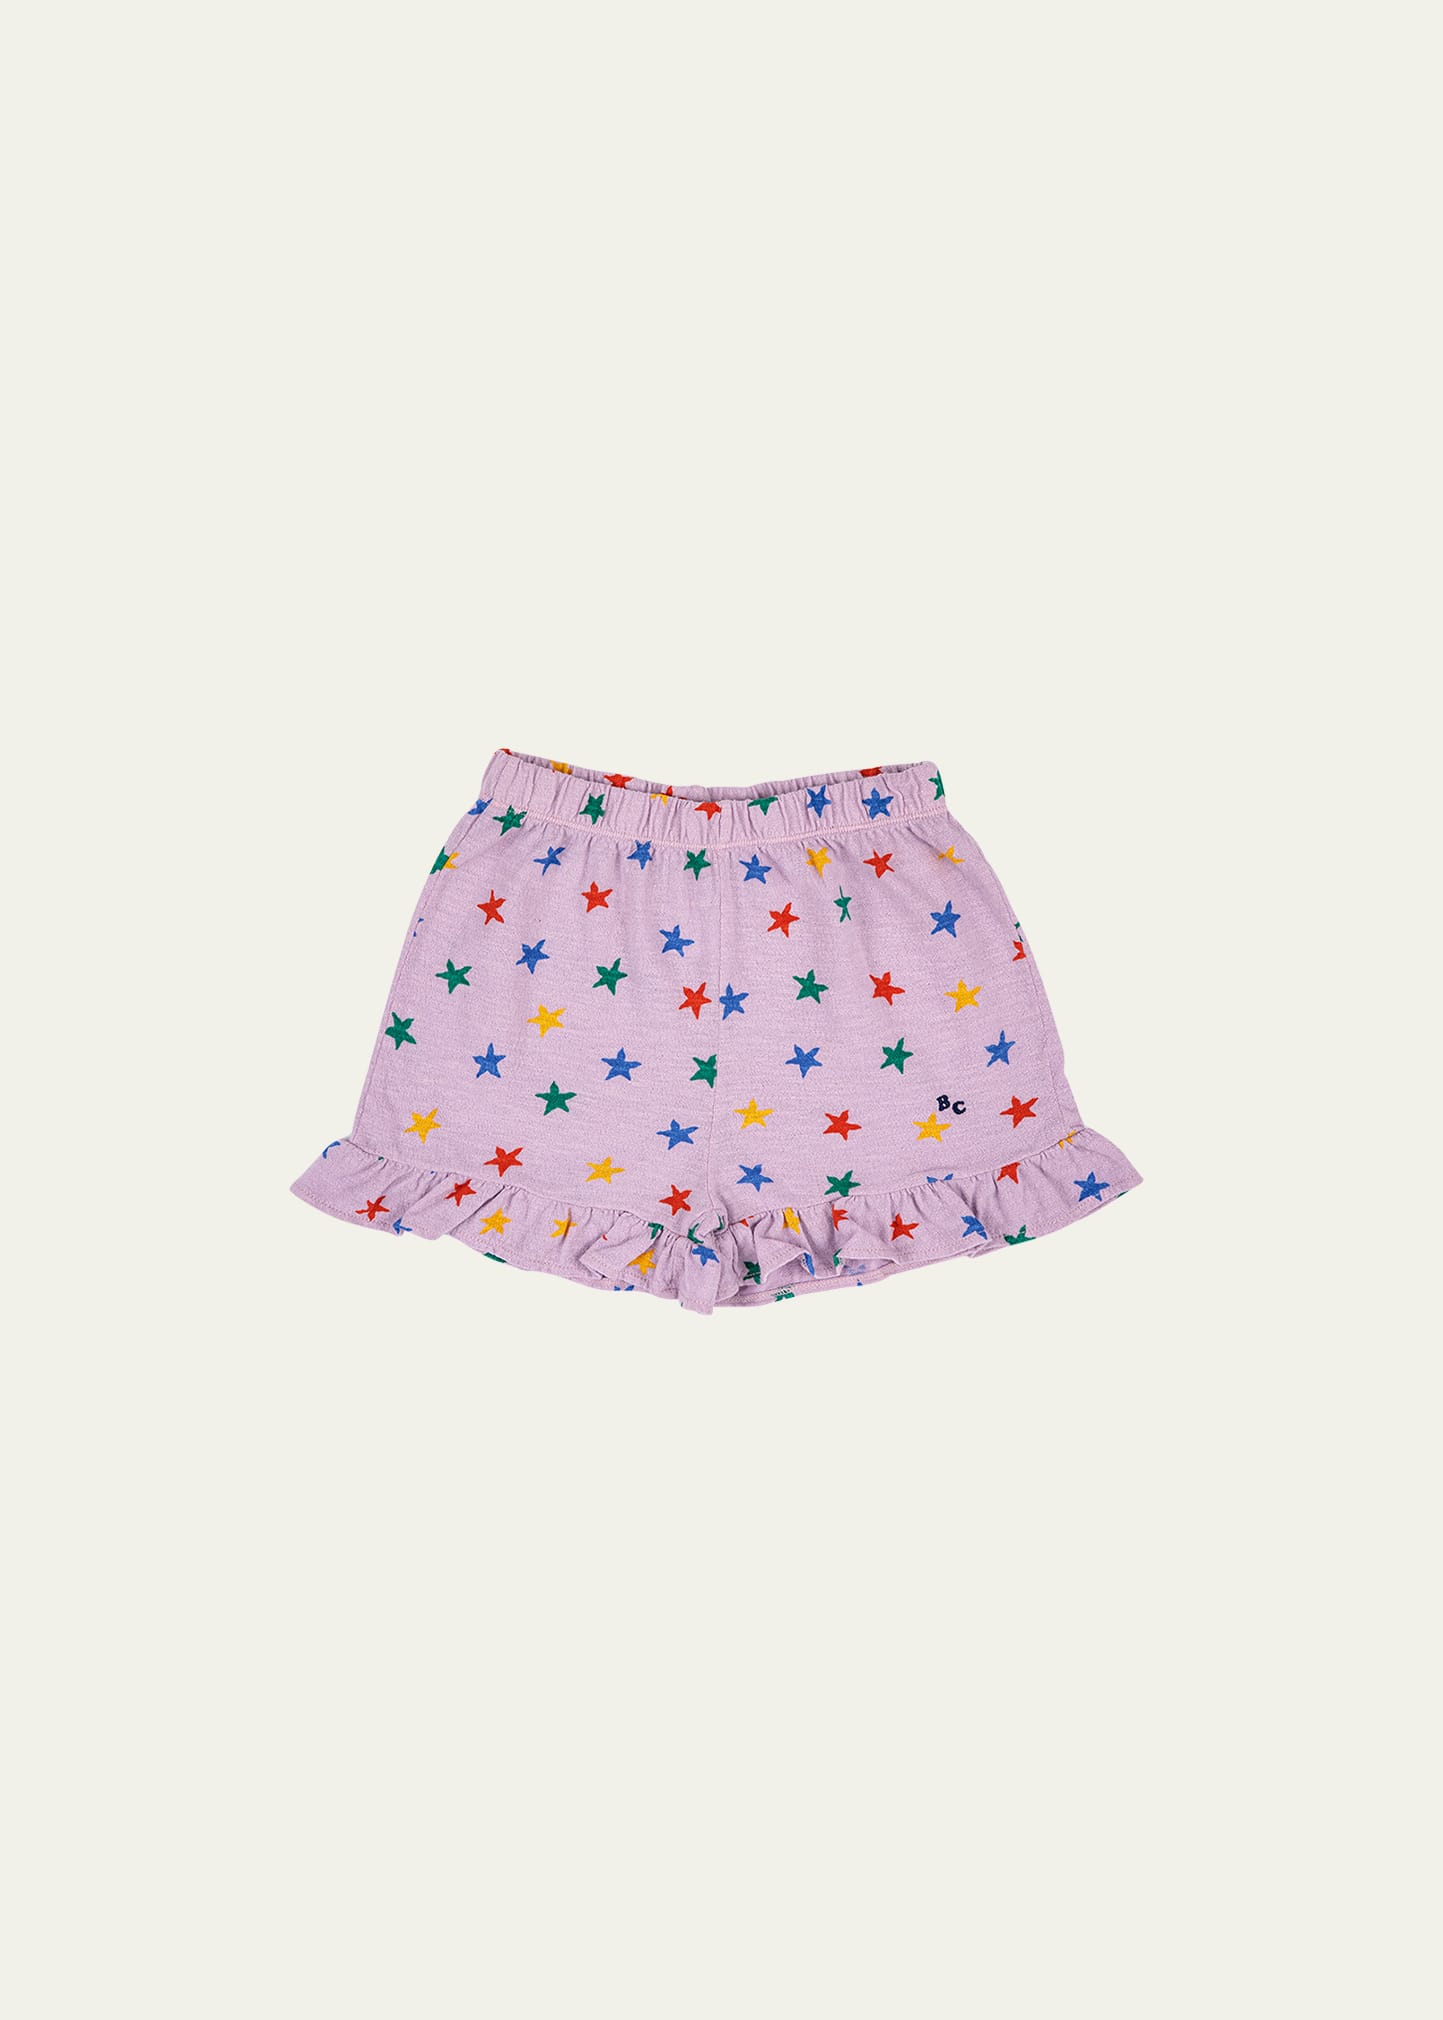 Bobo Choses Girl's Multicolor Star-Print Ruffle Shorts, Size 4-13